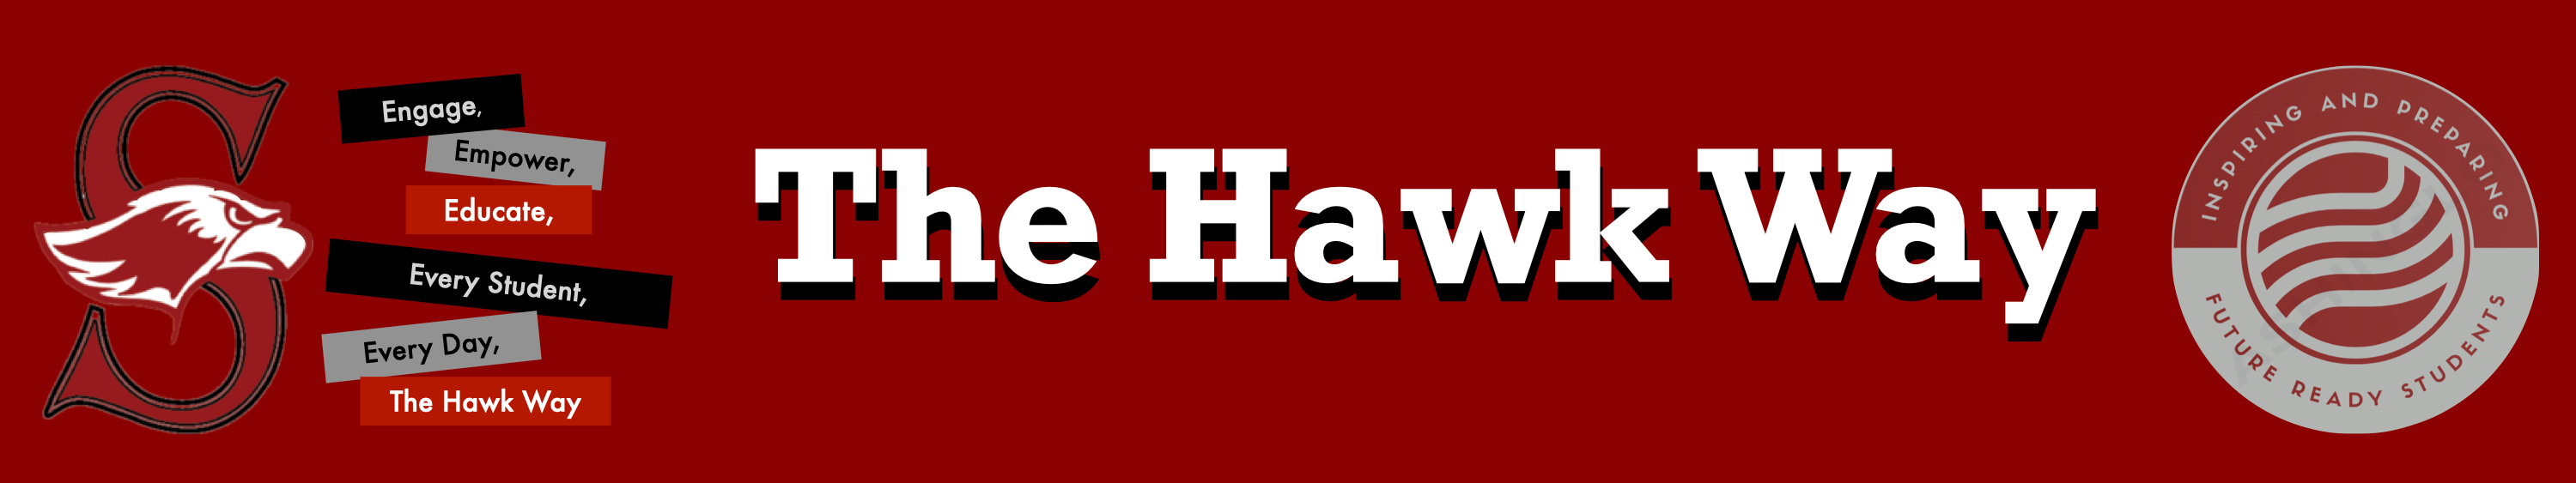 The Hawk Way